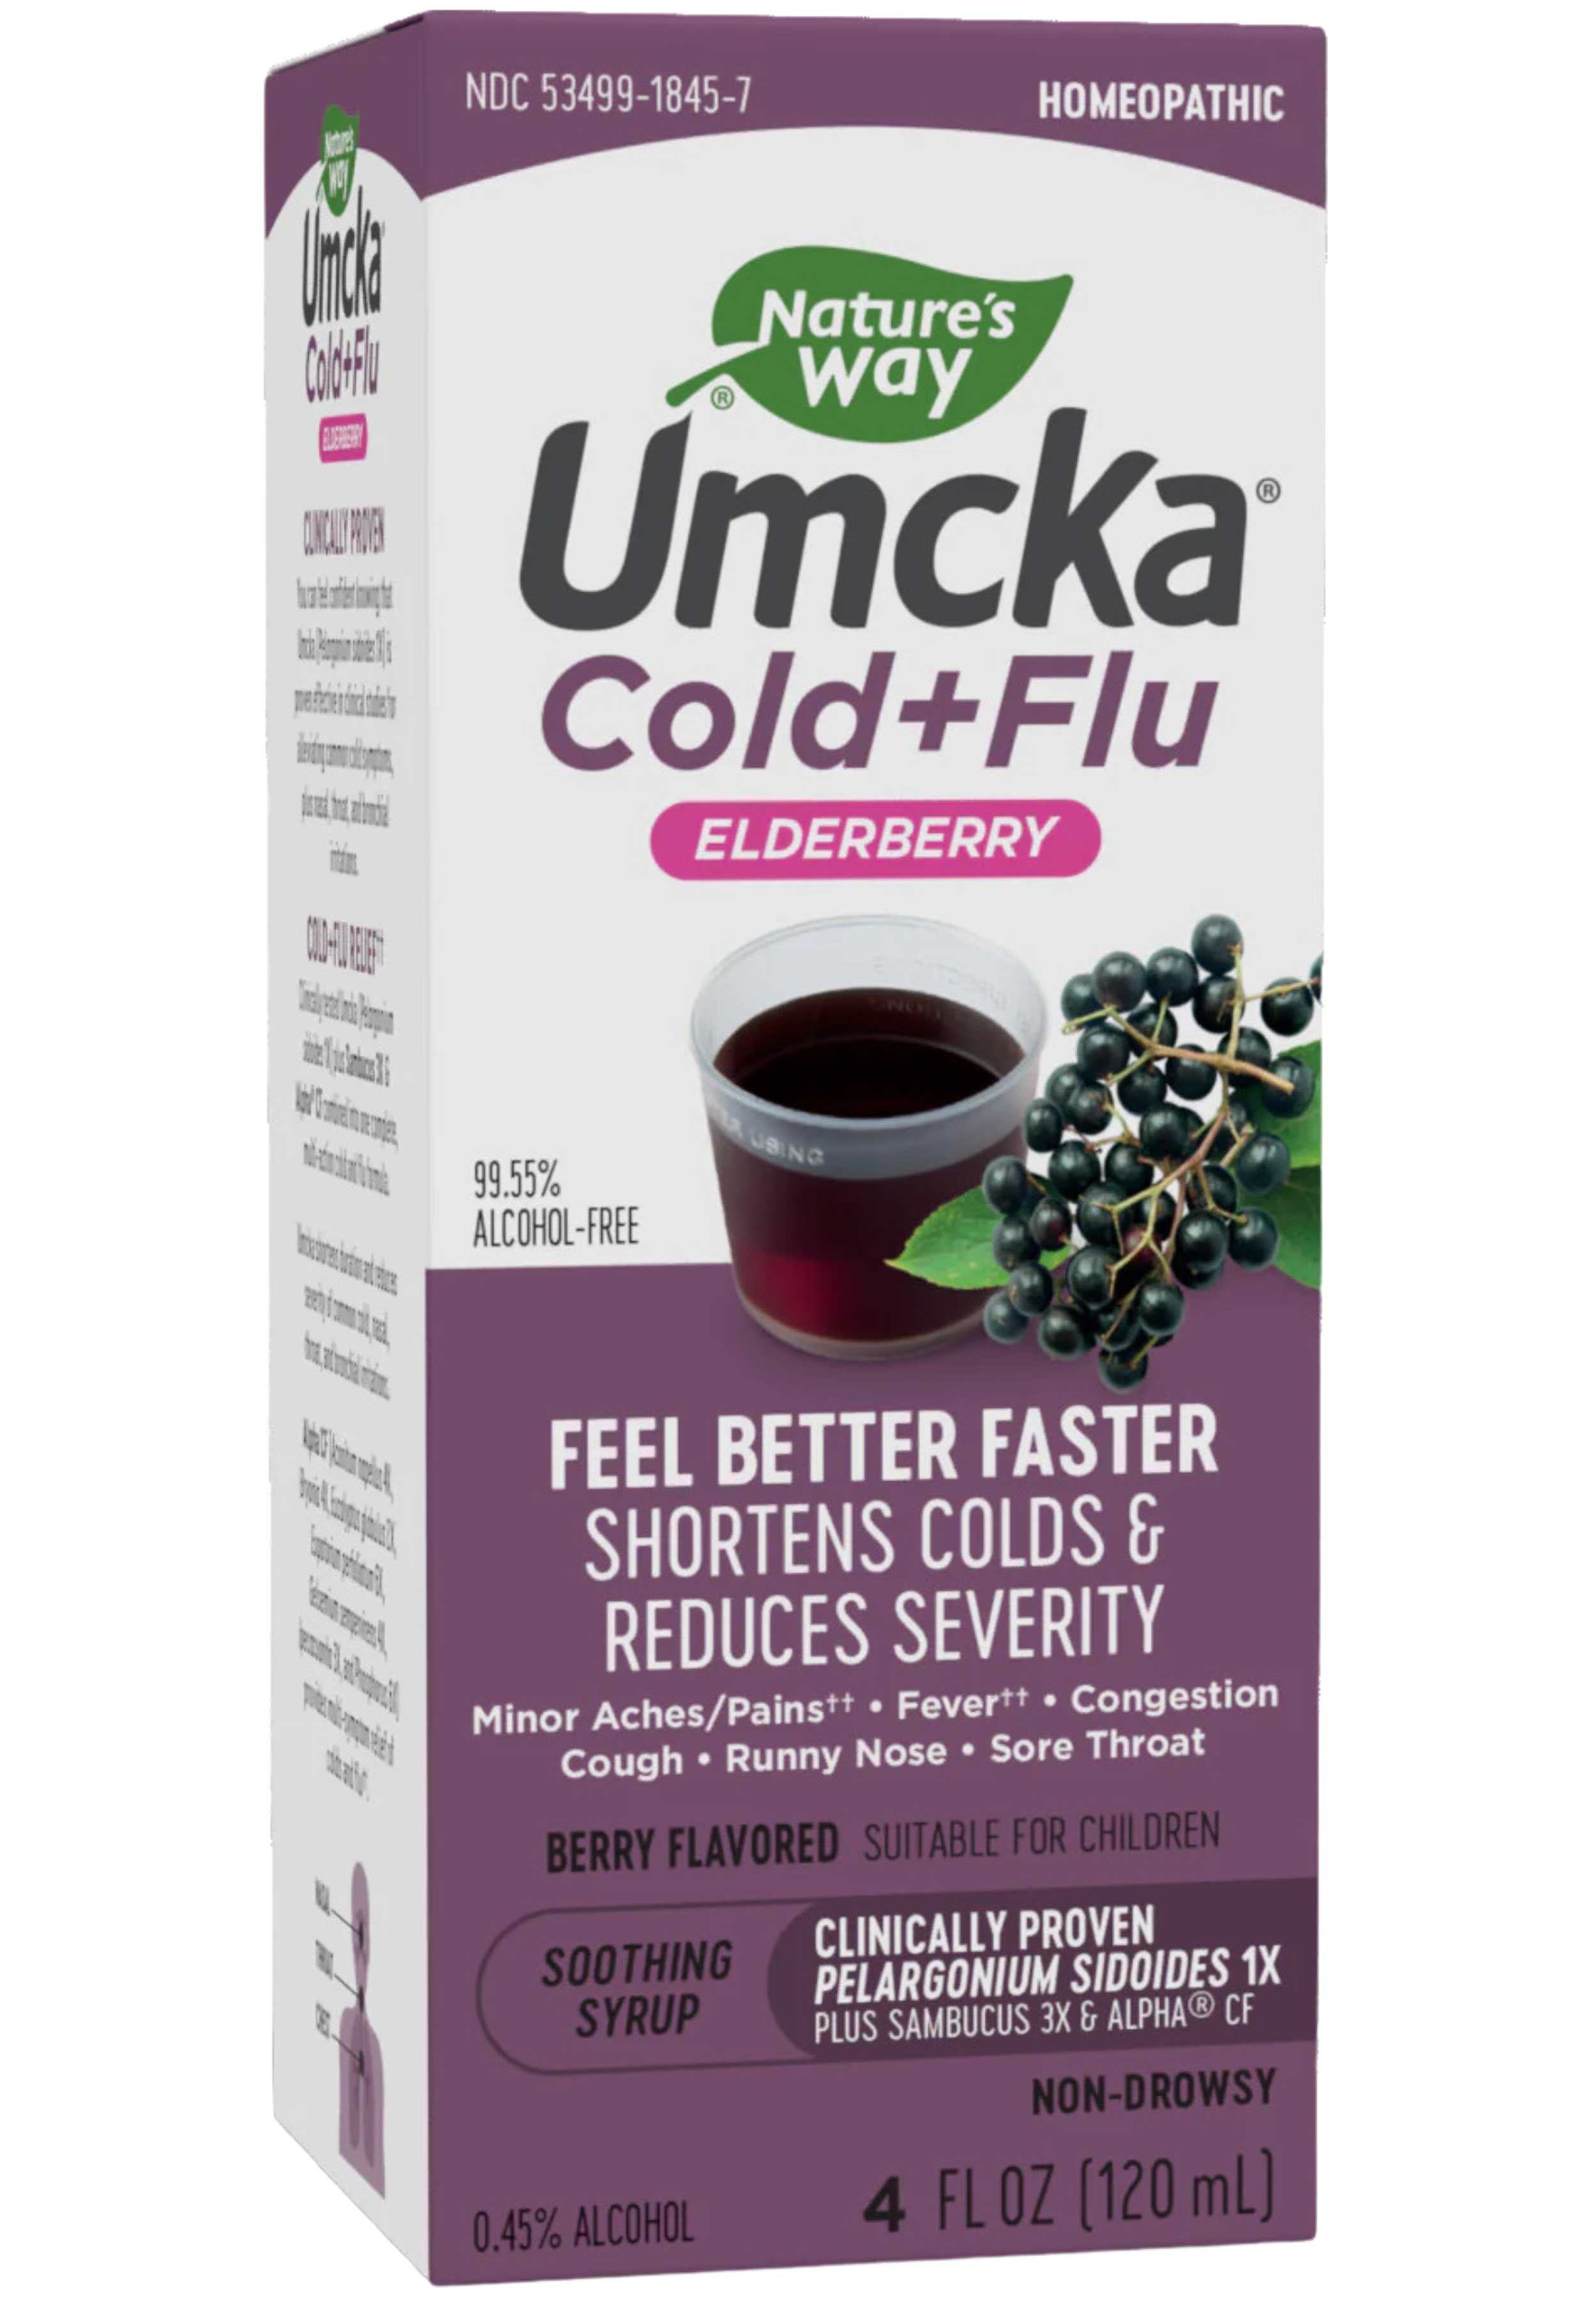 Nature's Way Umcka Elderberry Cold+Flu Syrup